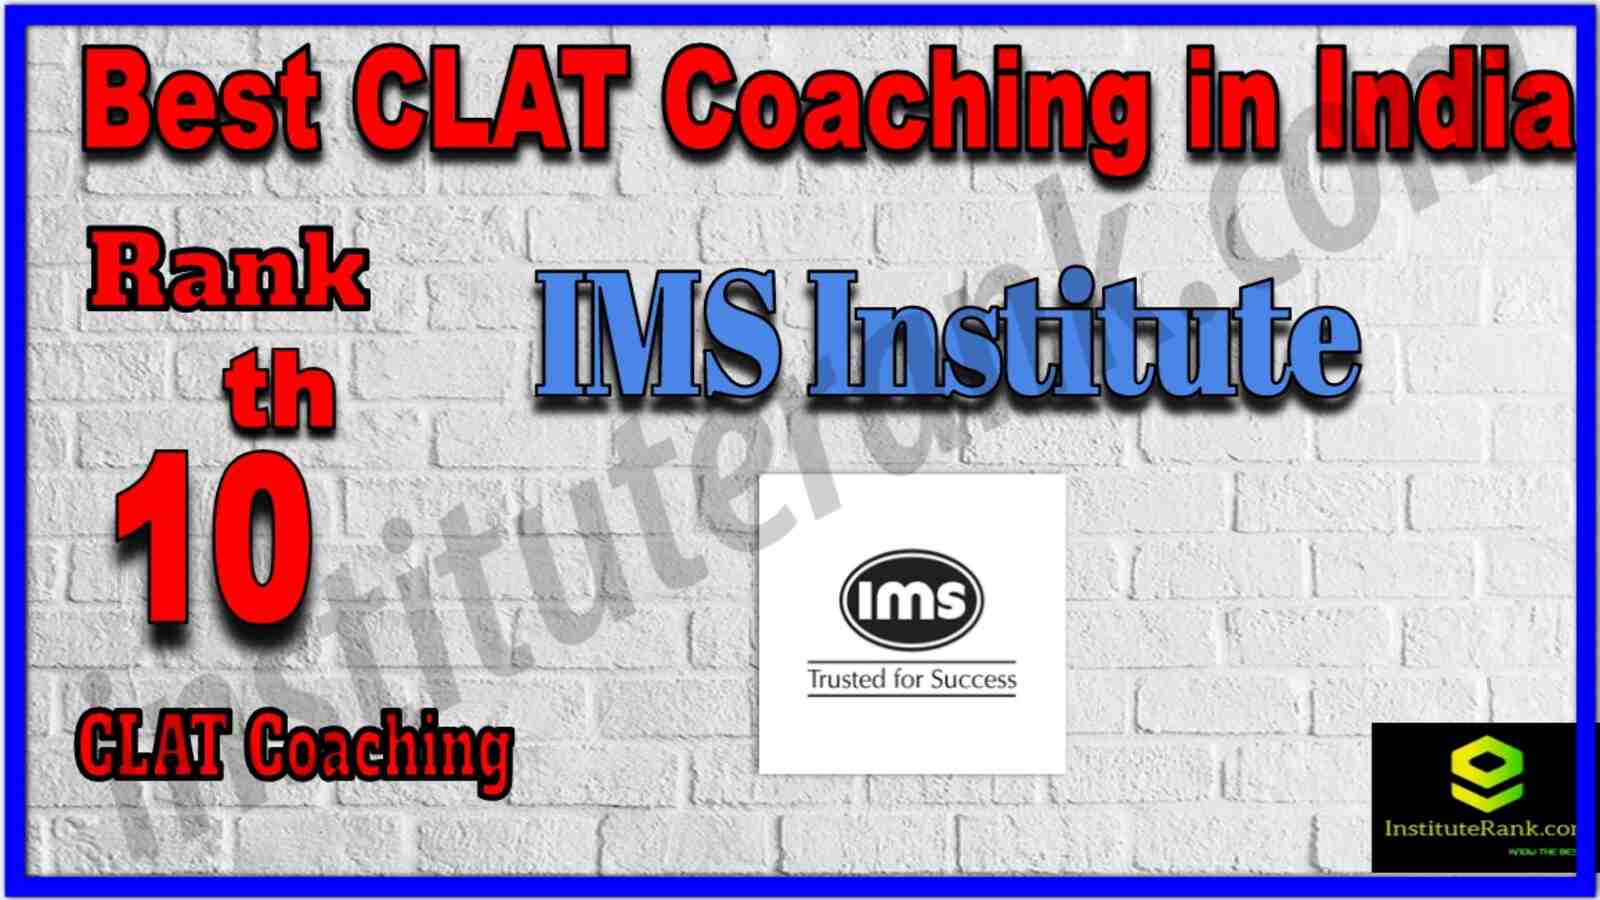 Rank 10 Best CLAT Coaching in India